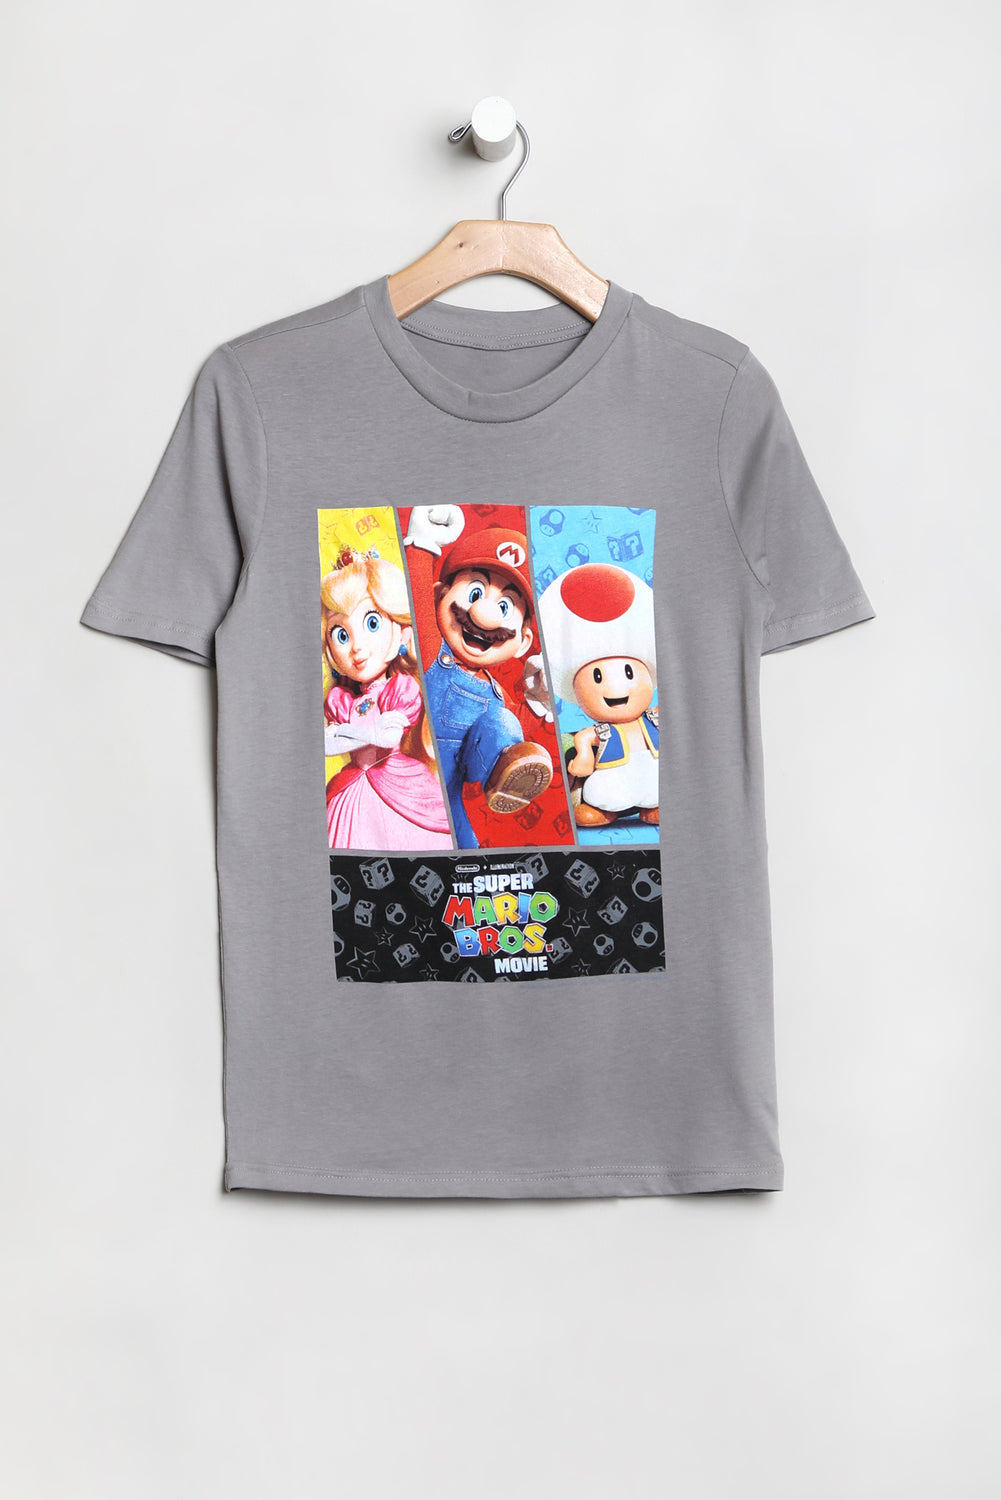 Youth Super Mario Bros. T-Shirt Youth Super Mario Bros. T-Shirt